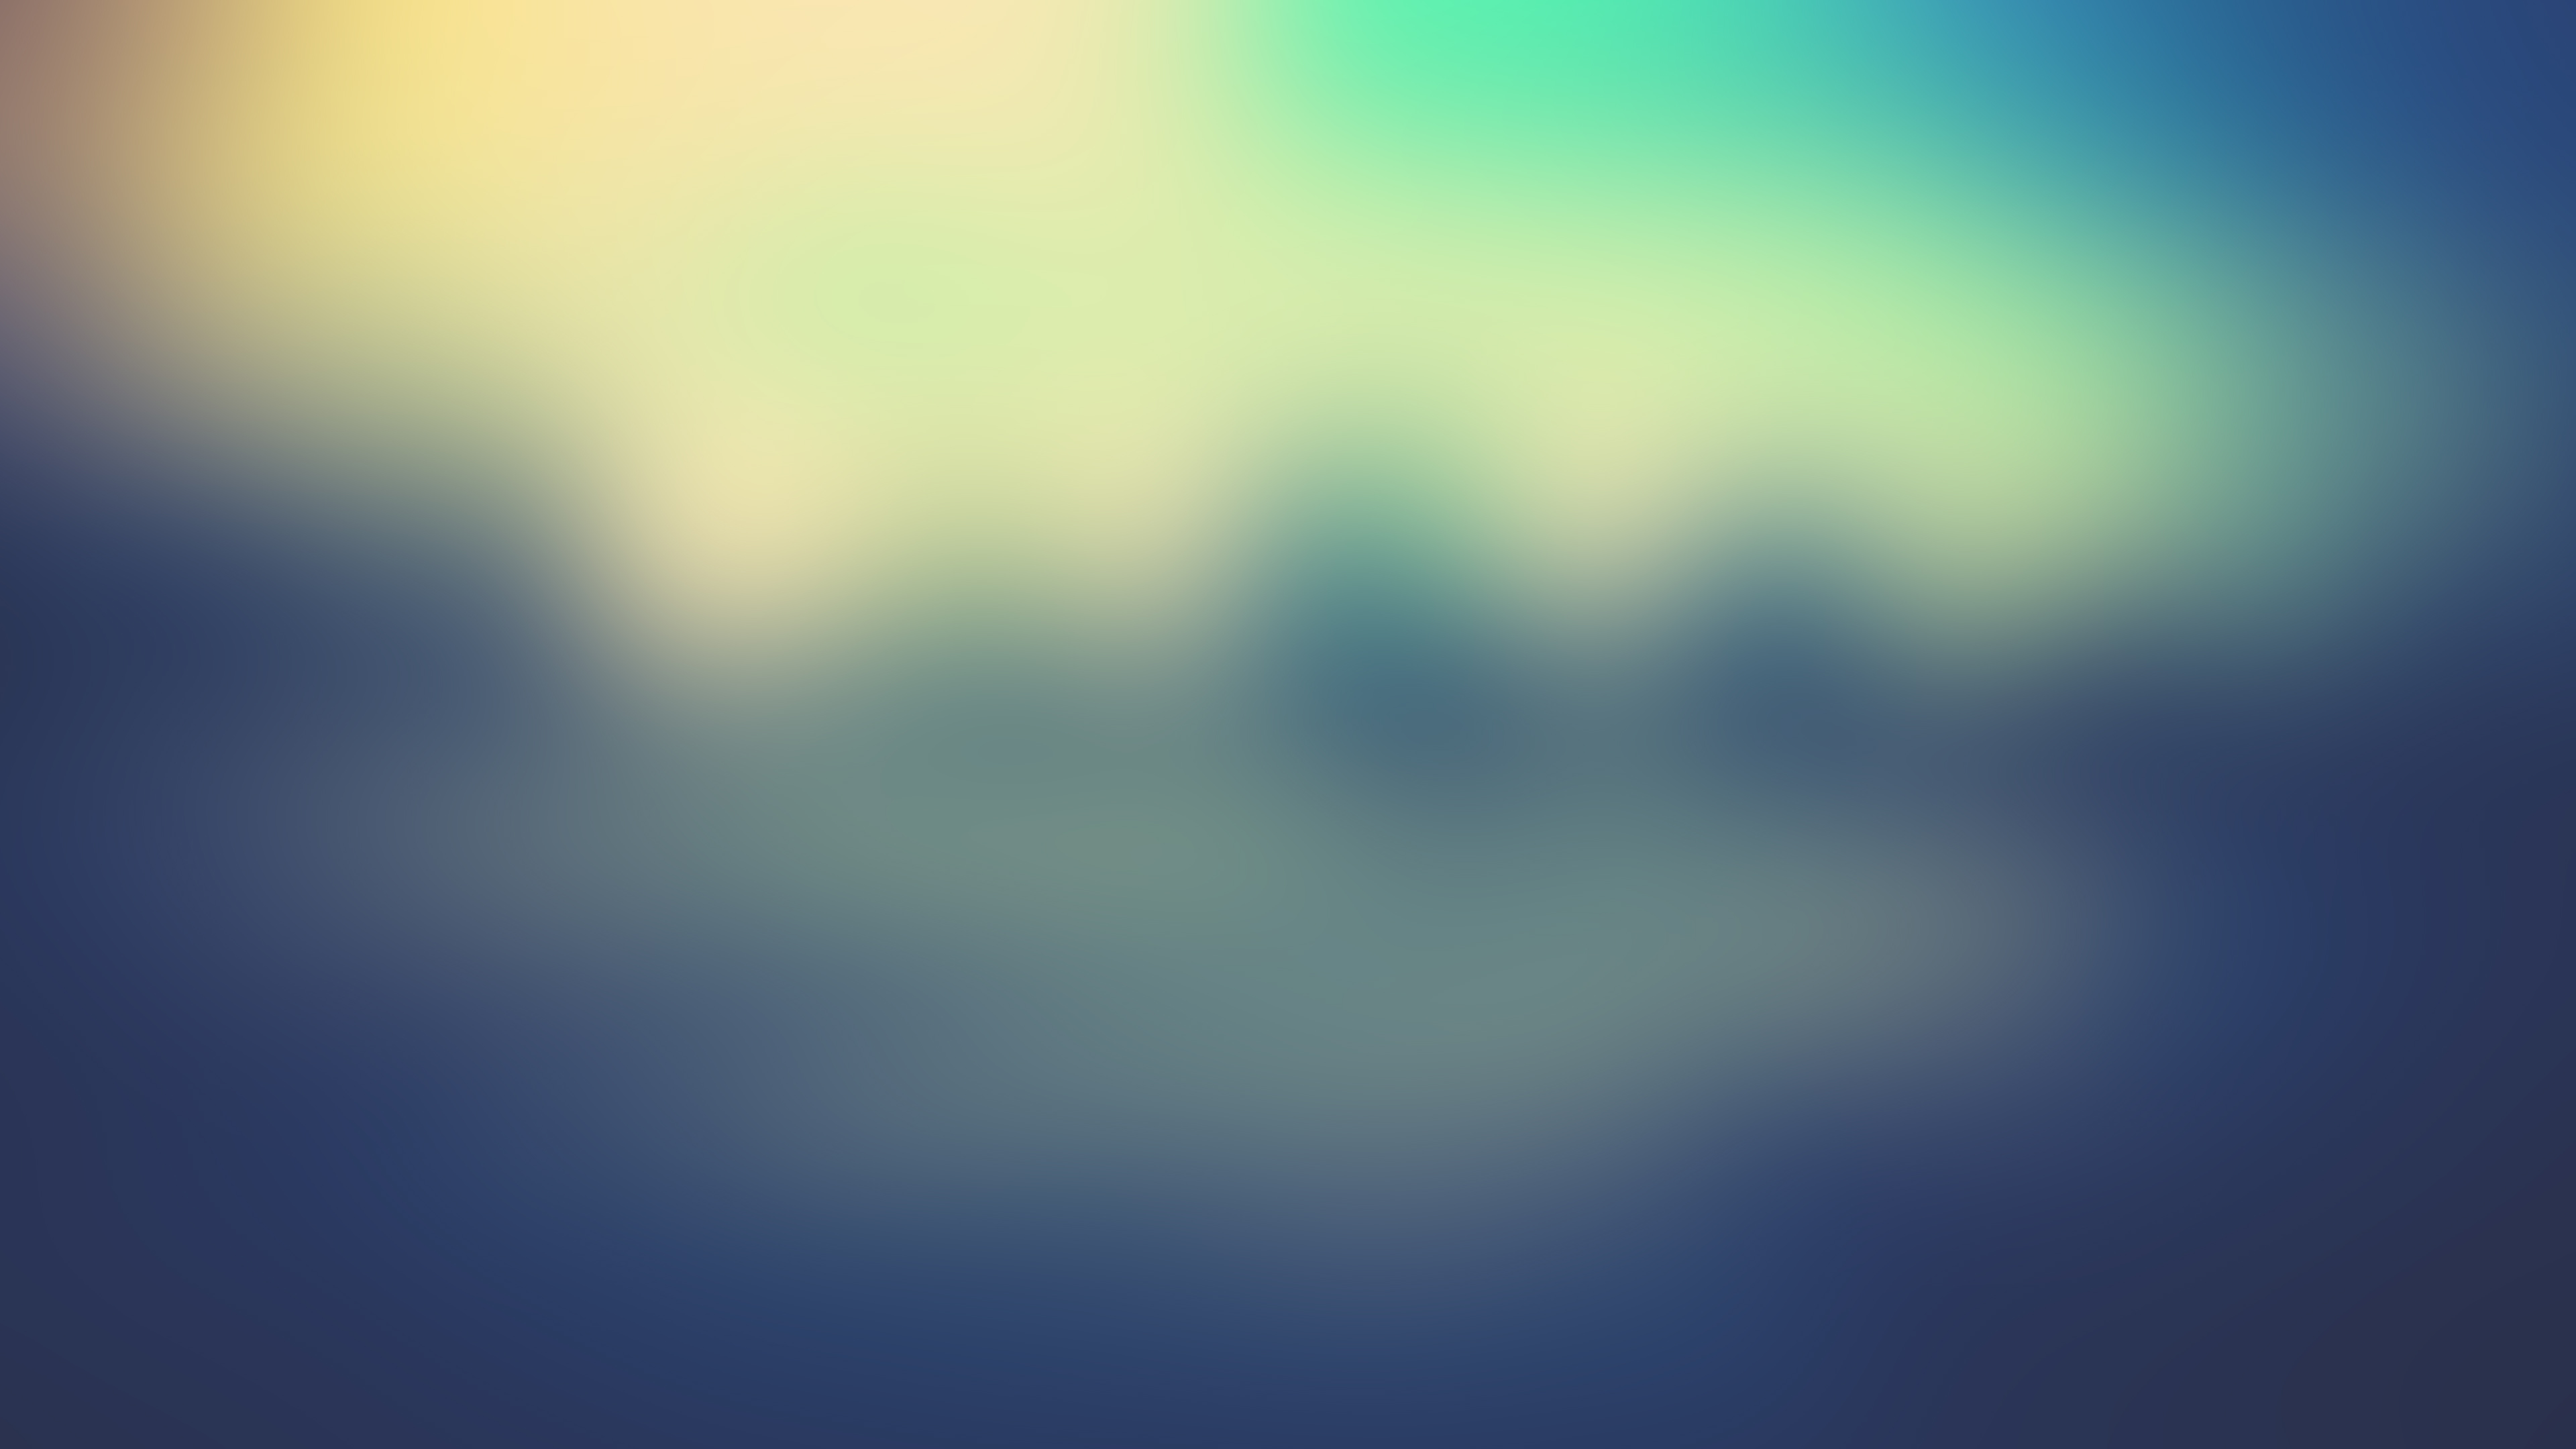 blurred background - Ideal.vistalist.co